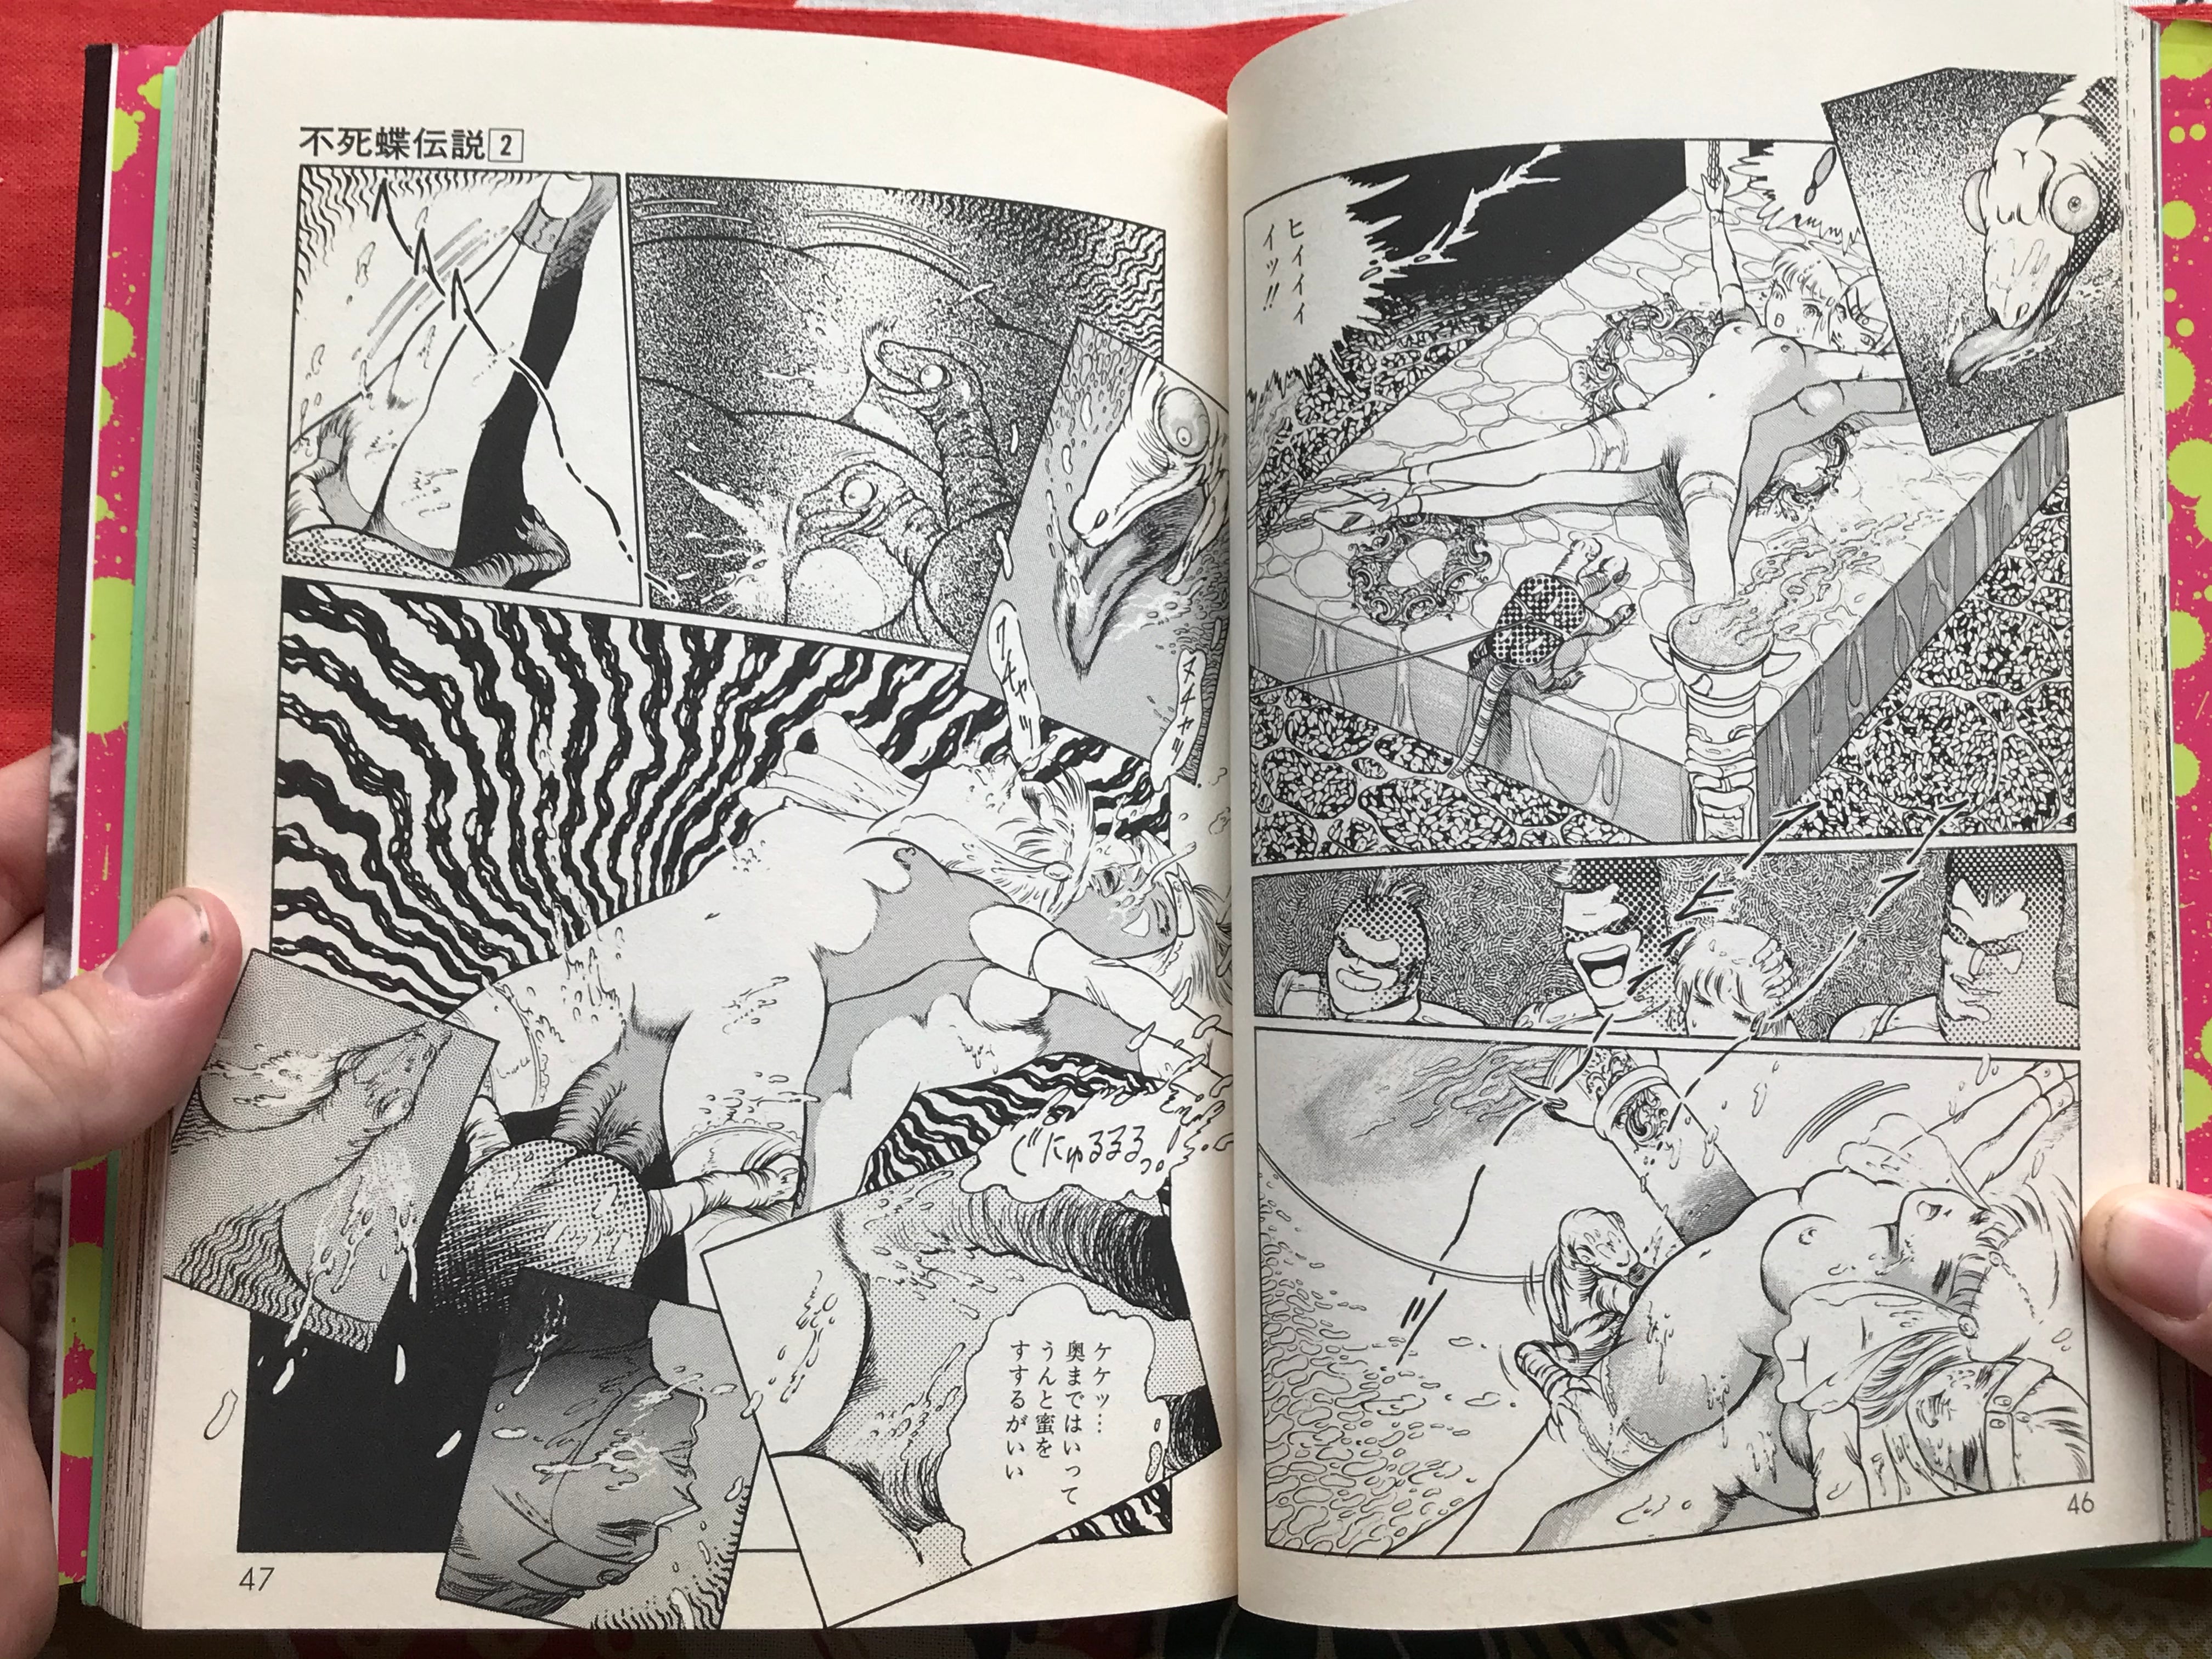 Legend of Fushichiyou / Immortal Butterfly Legend (1989)